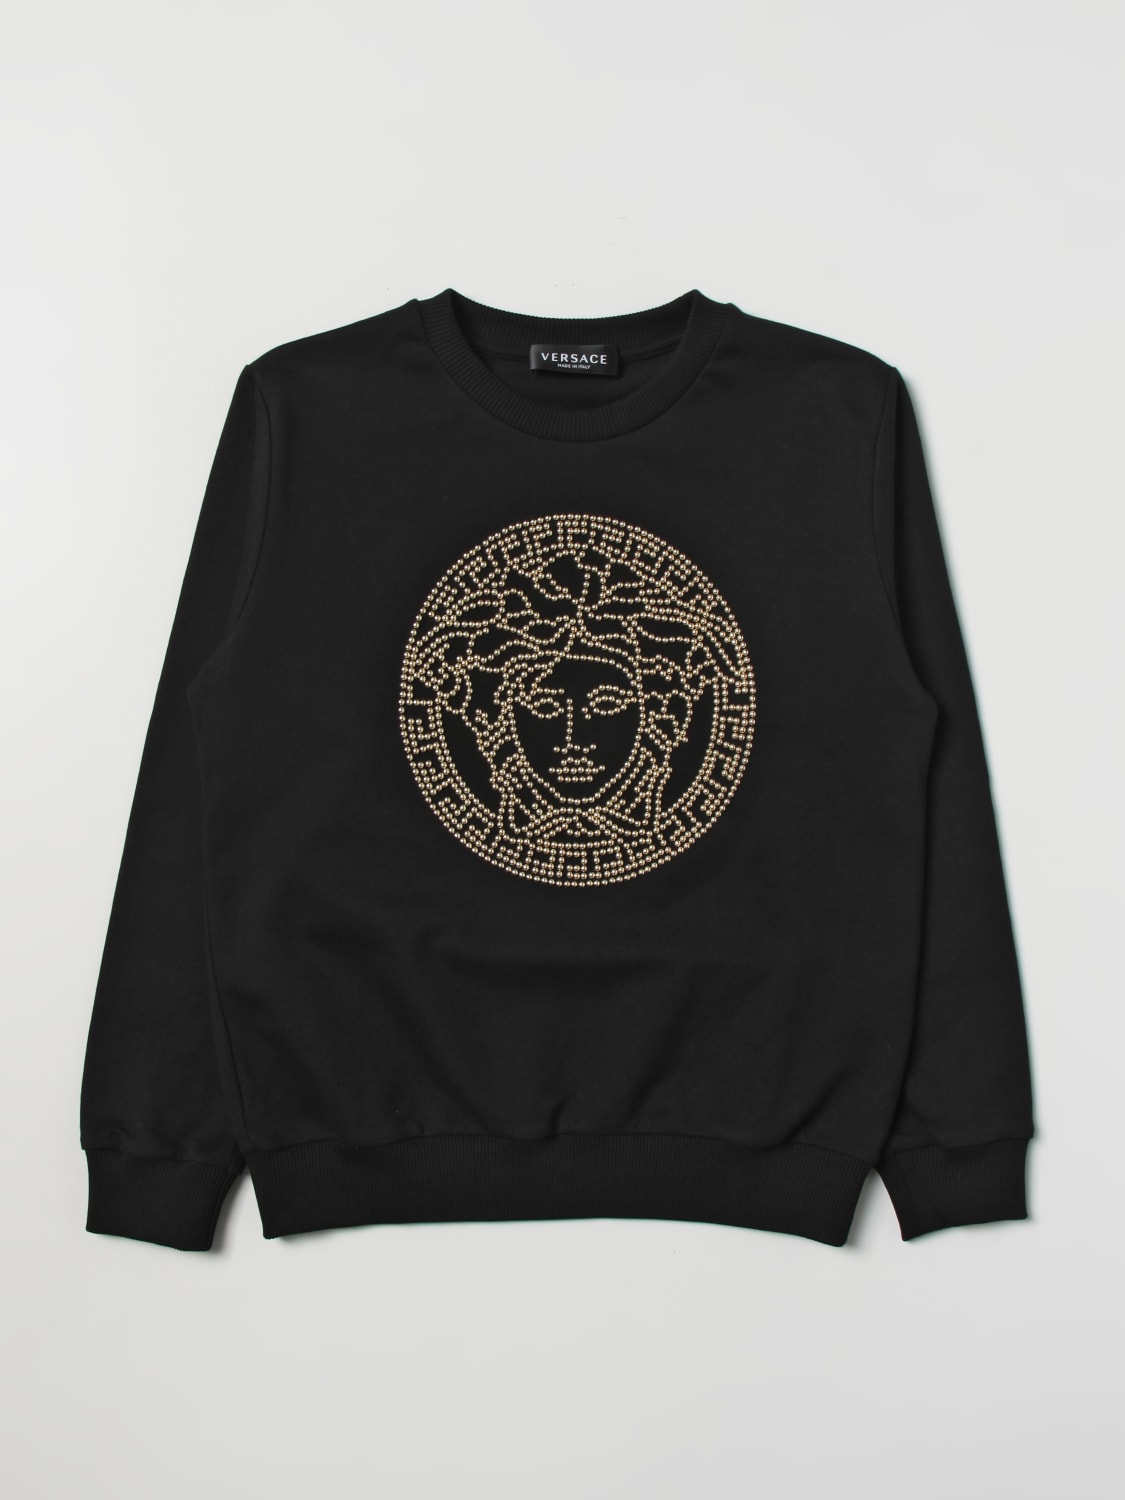 strand Pompeii als YOUNG VERSACE: sweater for boys - Black | Young Versace sweater  10000491A06512 online on GIGLIO.COM